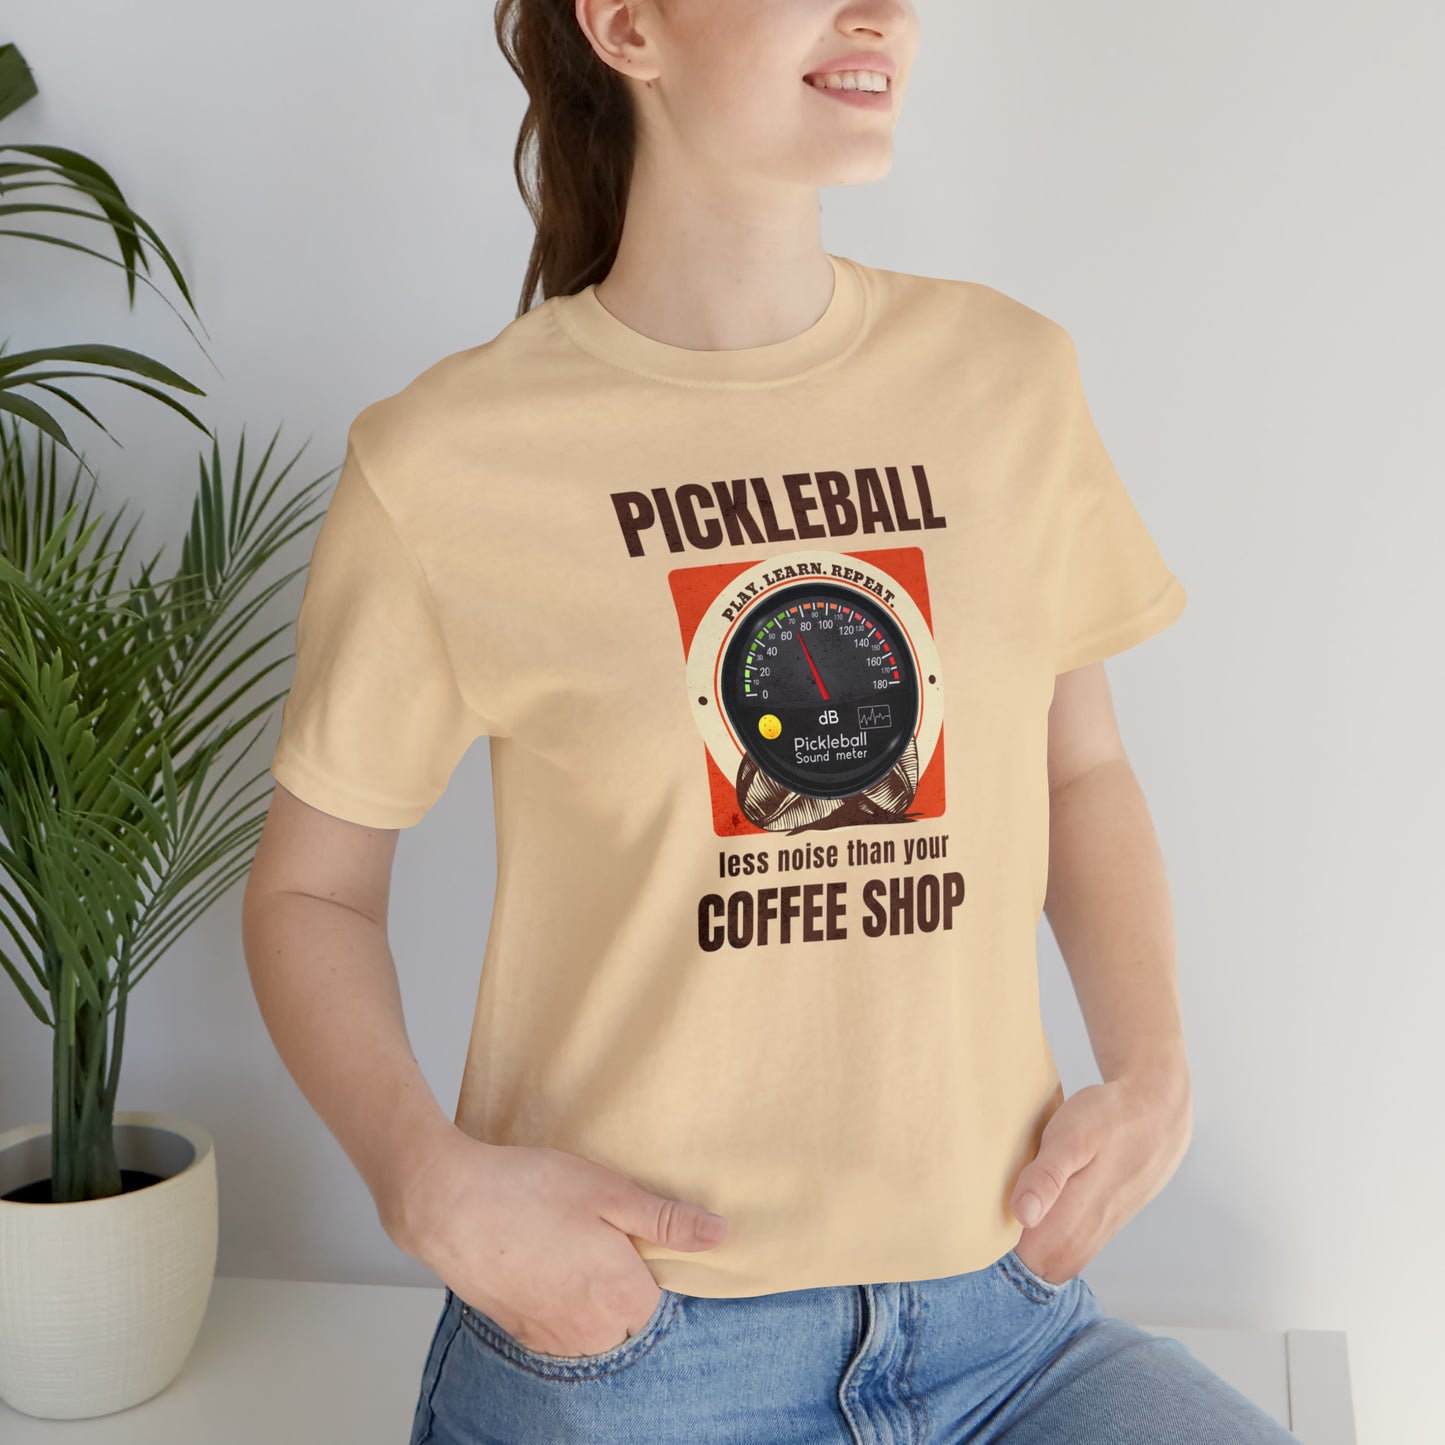 Pickleball Noise: Quieter Than Coffee Shop